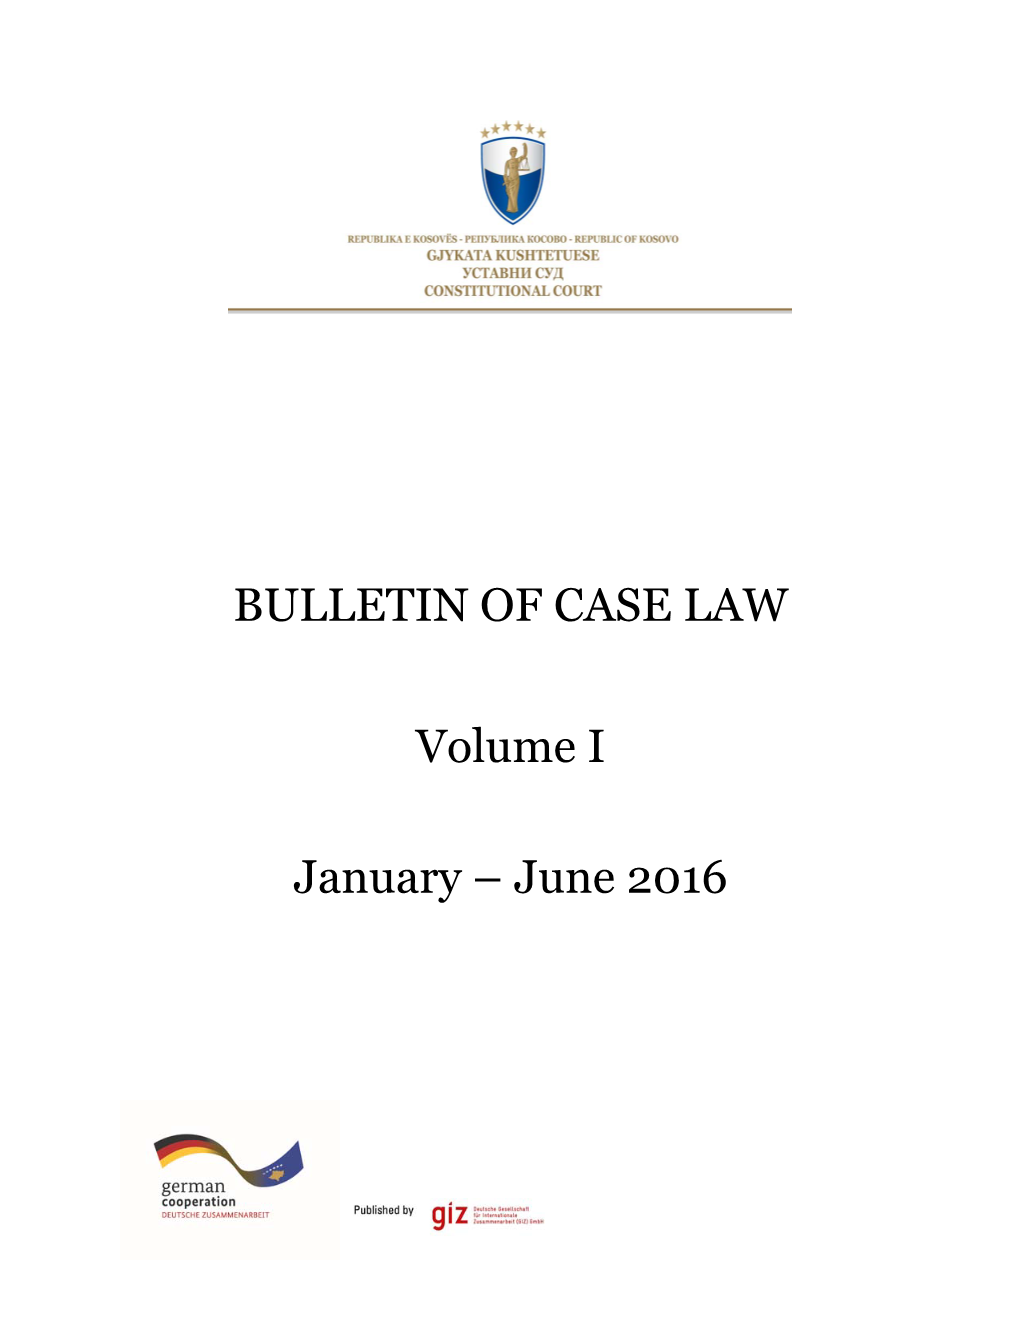 BULLETIN of CASE LAW Volume I January – June 2016